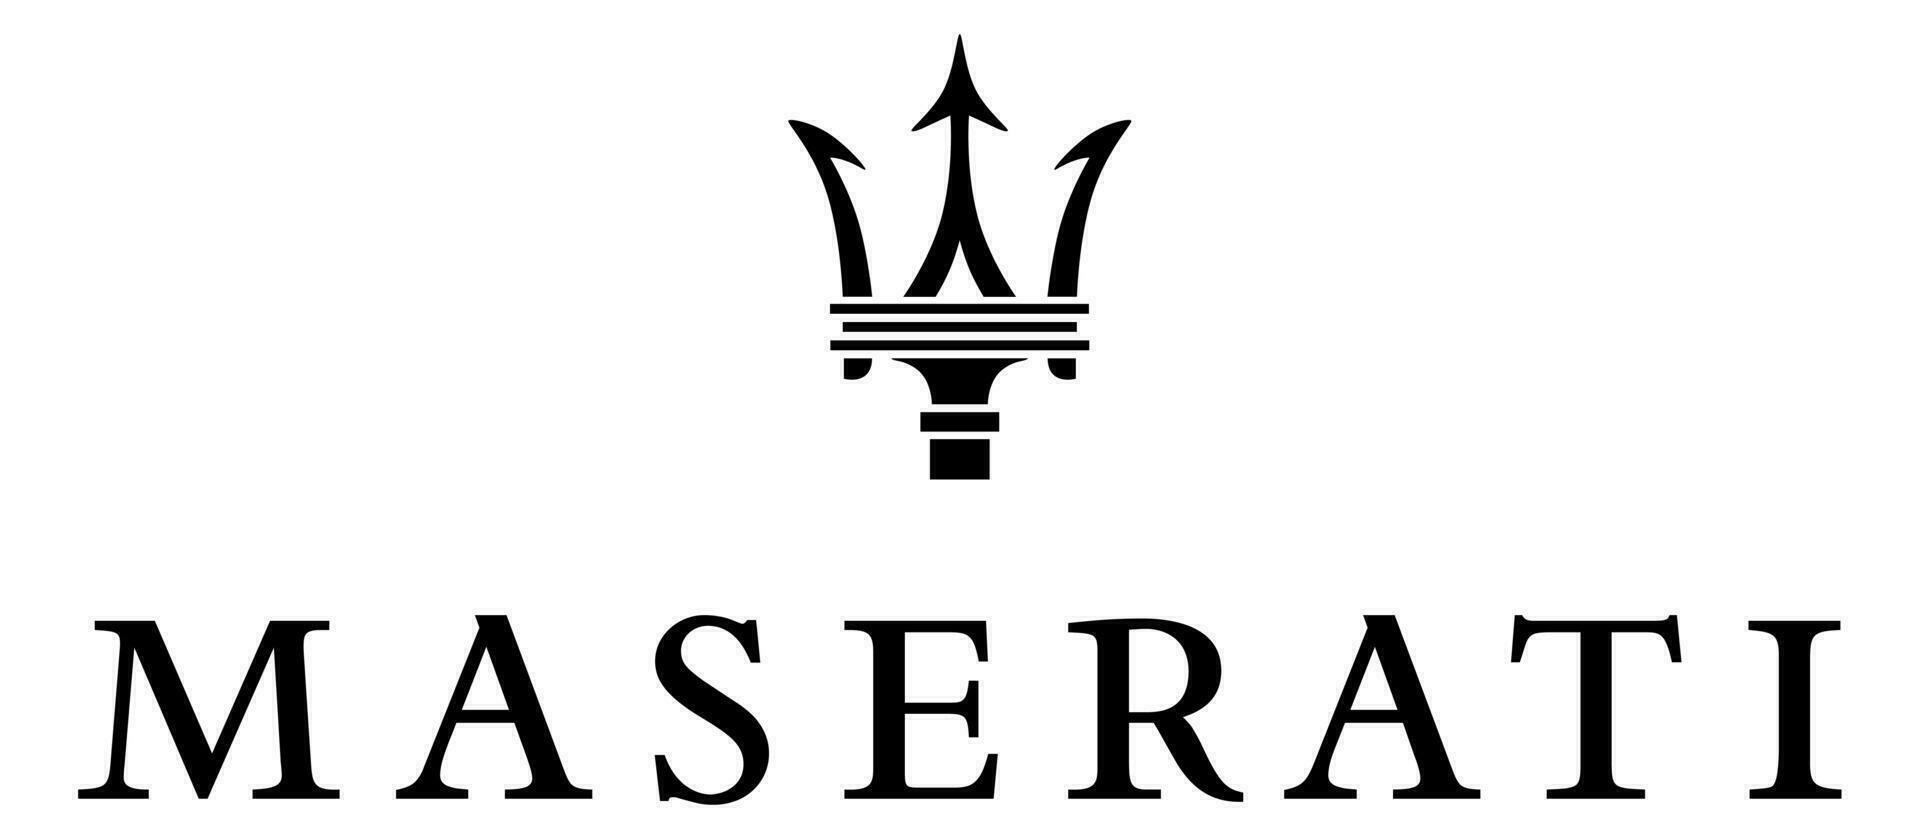 Maserati car logo icon sign symbol vector